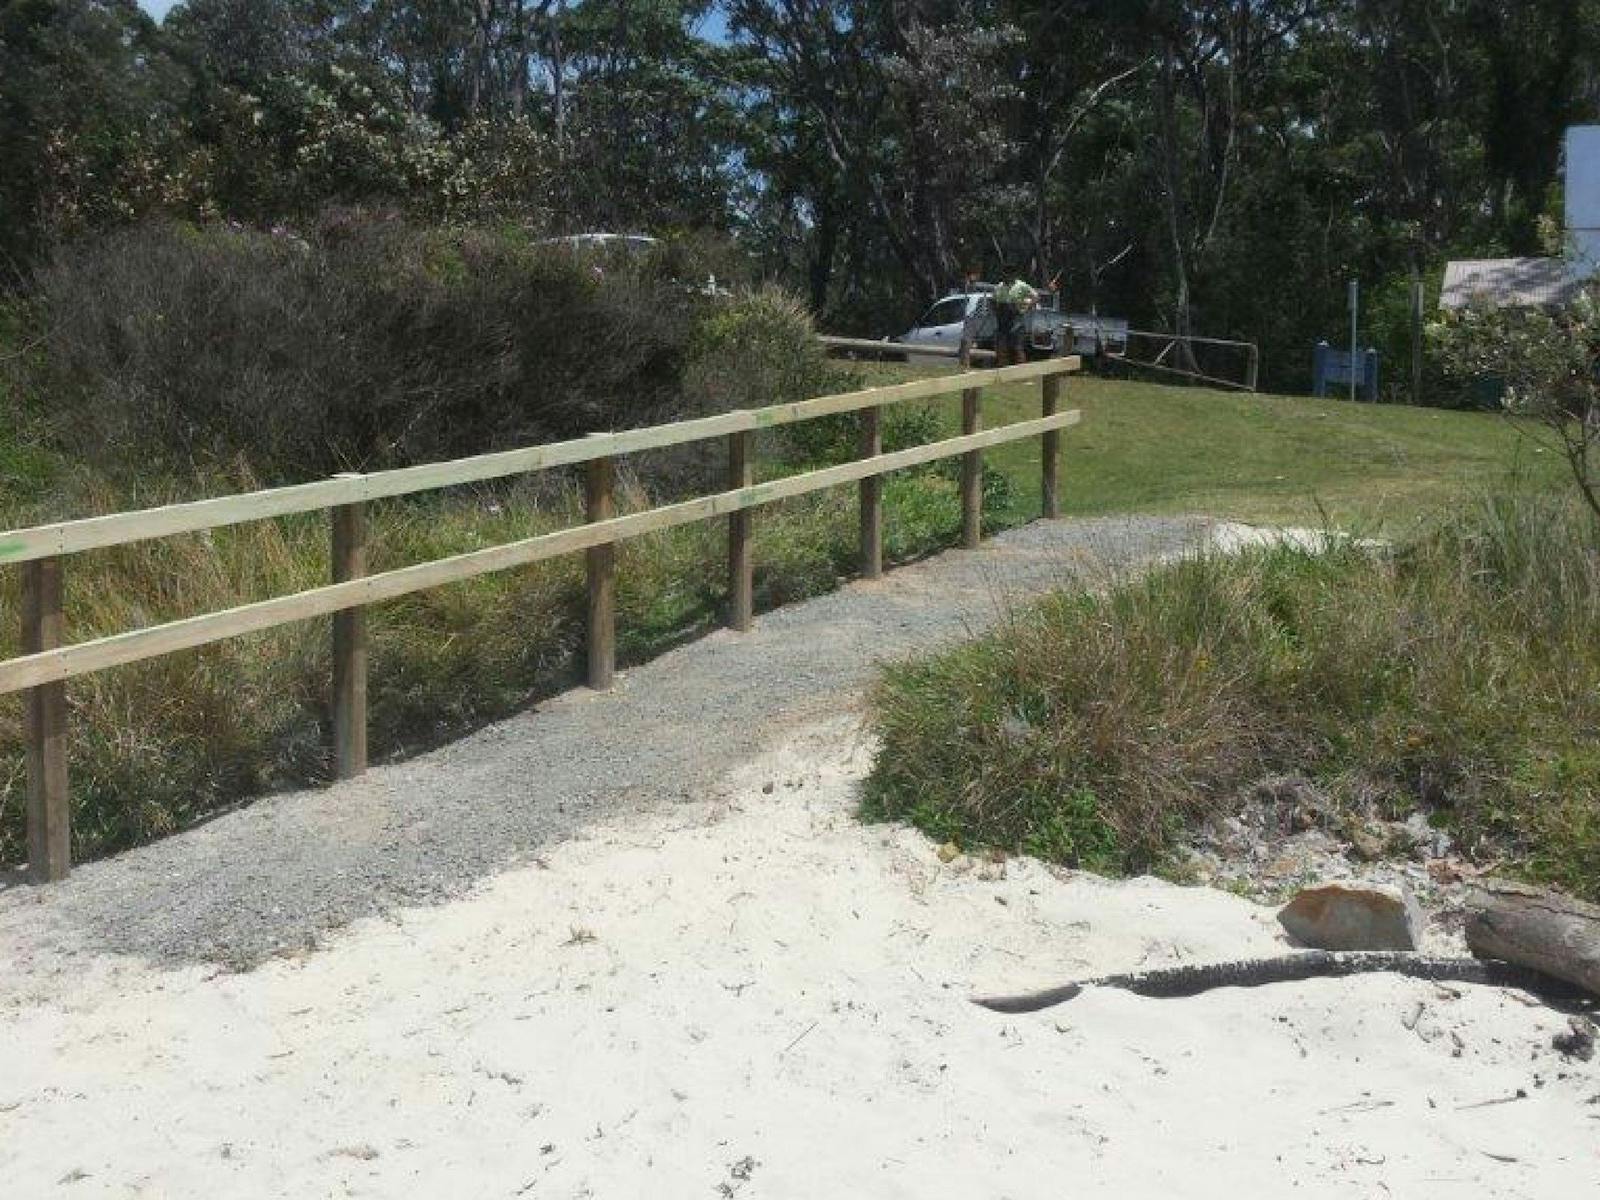 Beach access includes a ramp and handrail.